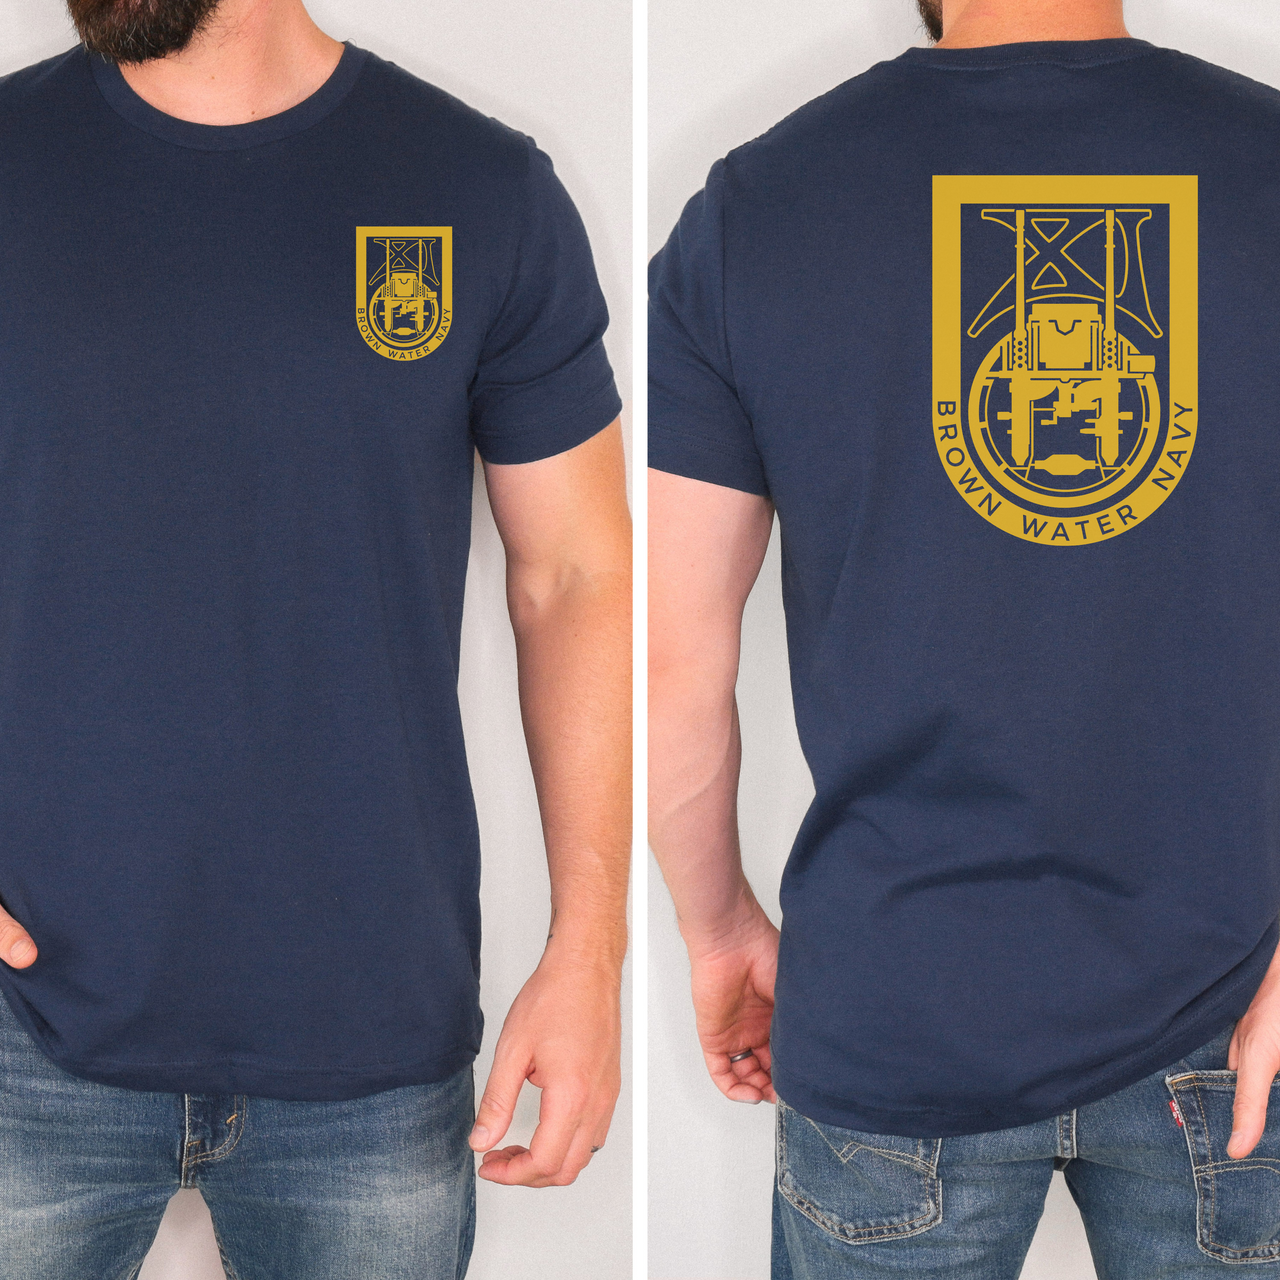 Special Boat Unit 11 v3 - SBU 11 T-Shirt (Gold)